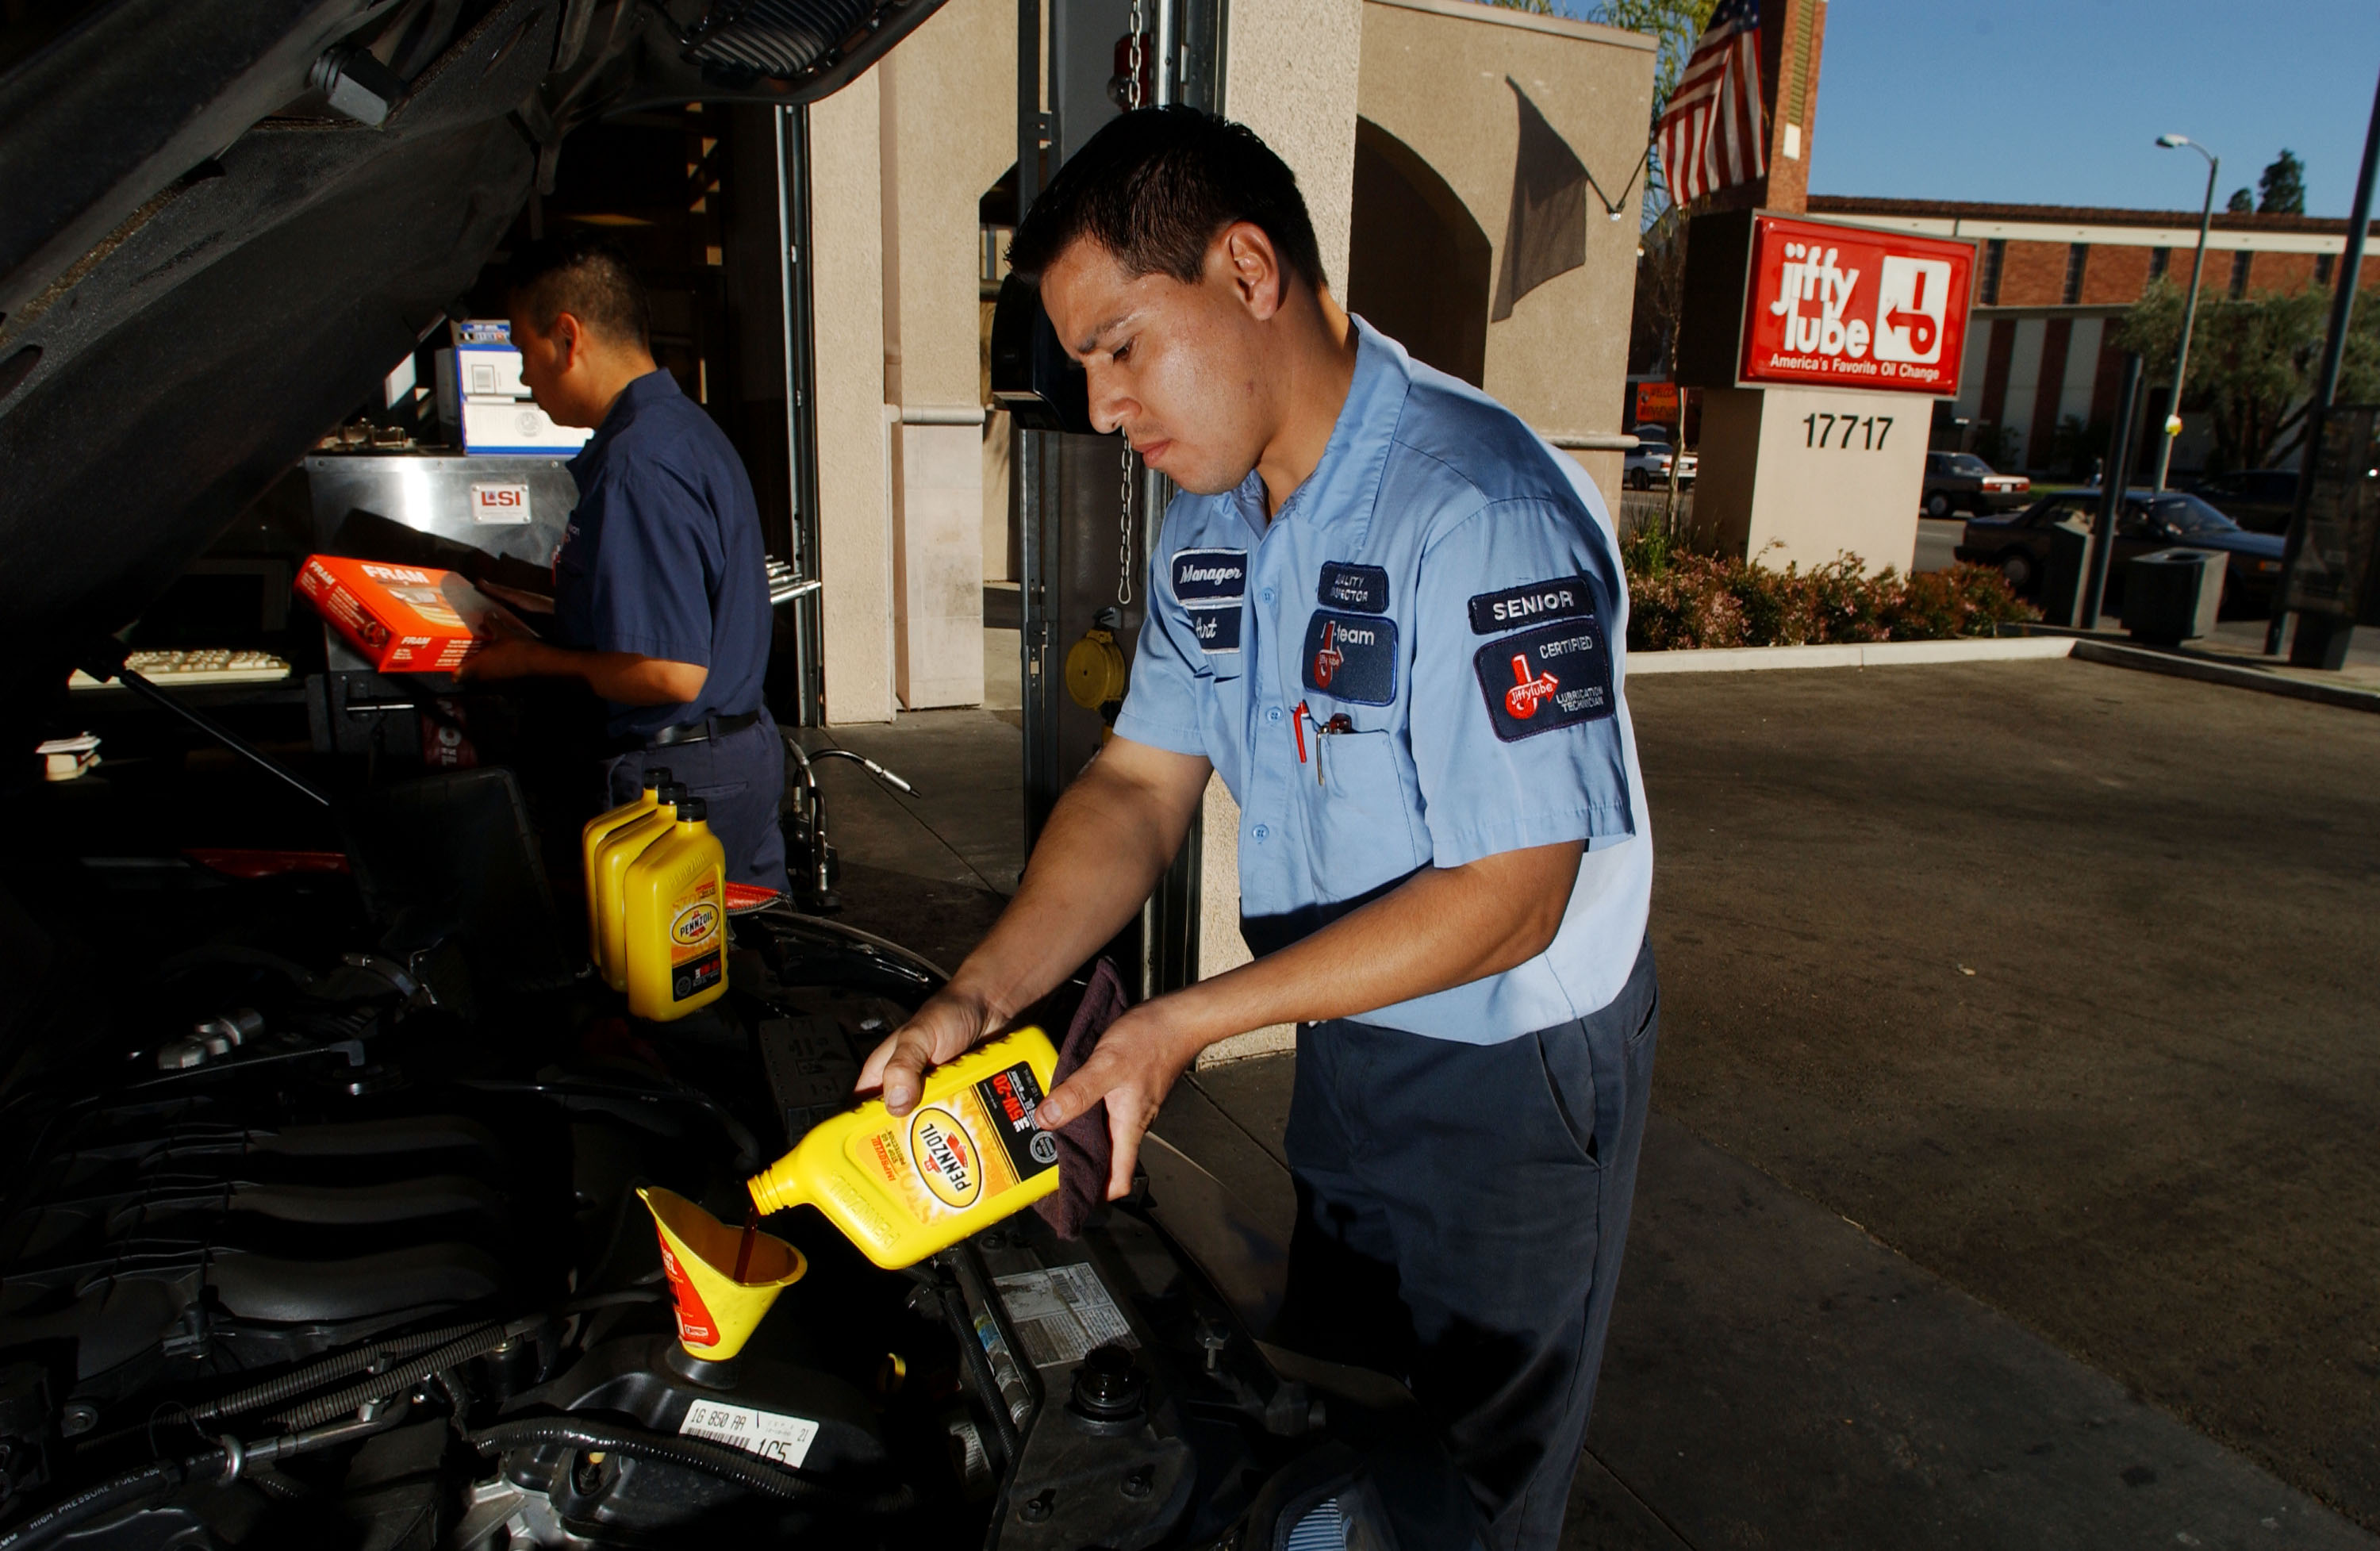 A man pours a new bottle of oil into a car